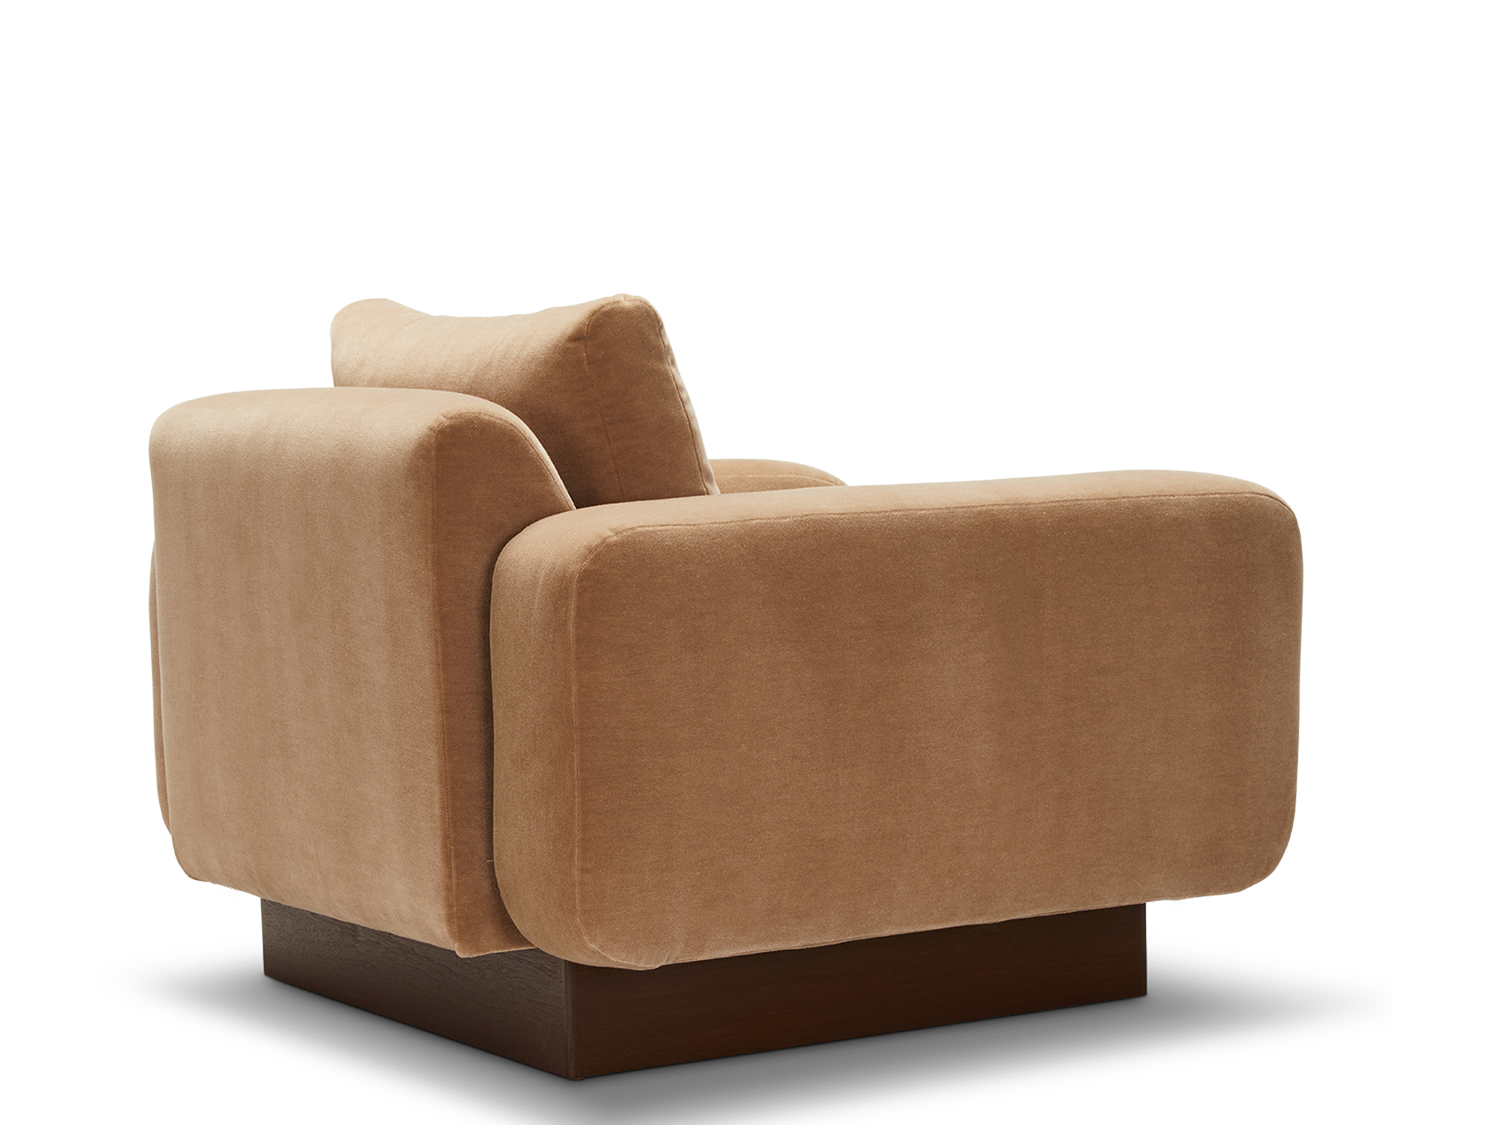 Mesa Lounge Chair - Contract Grade